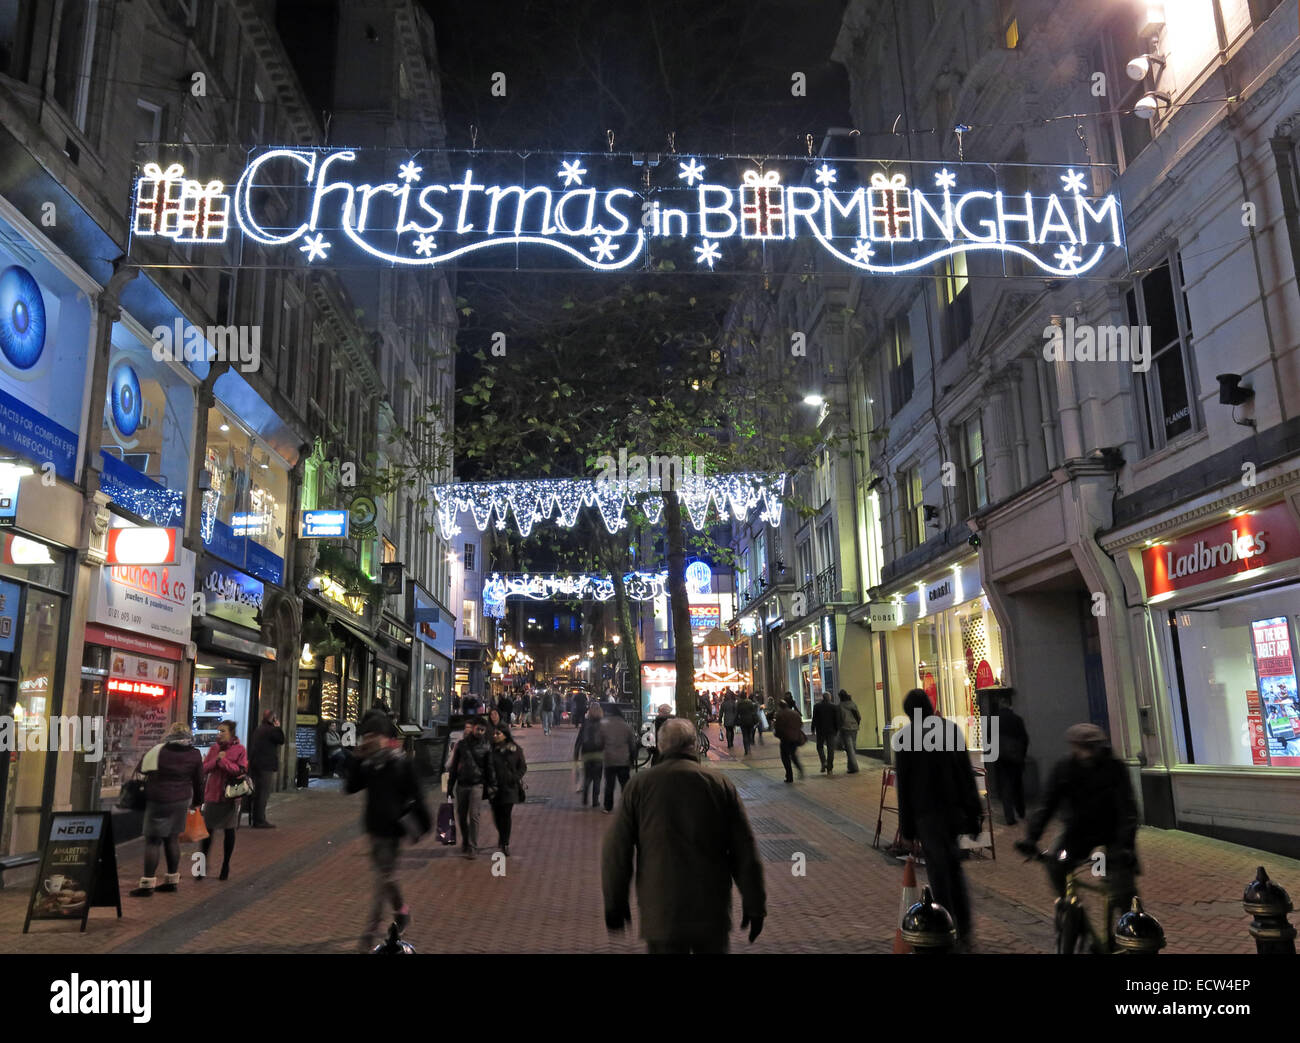 Christmas Lights In Birmingham, West Midlands, England,UK Stock Photo